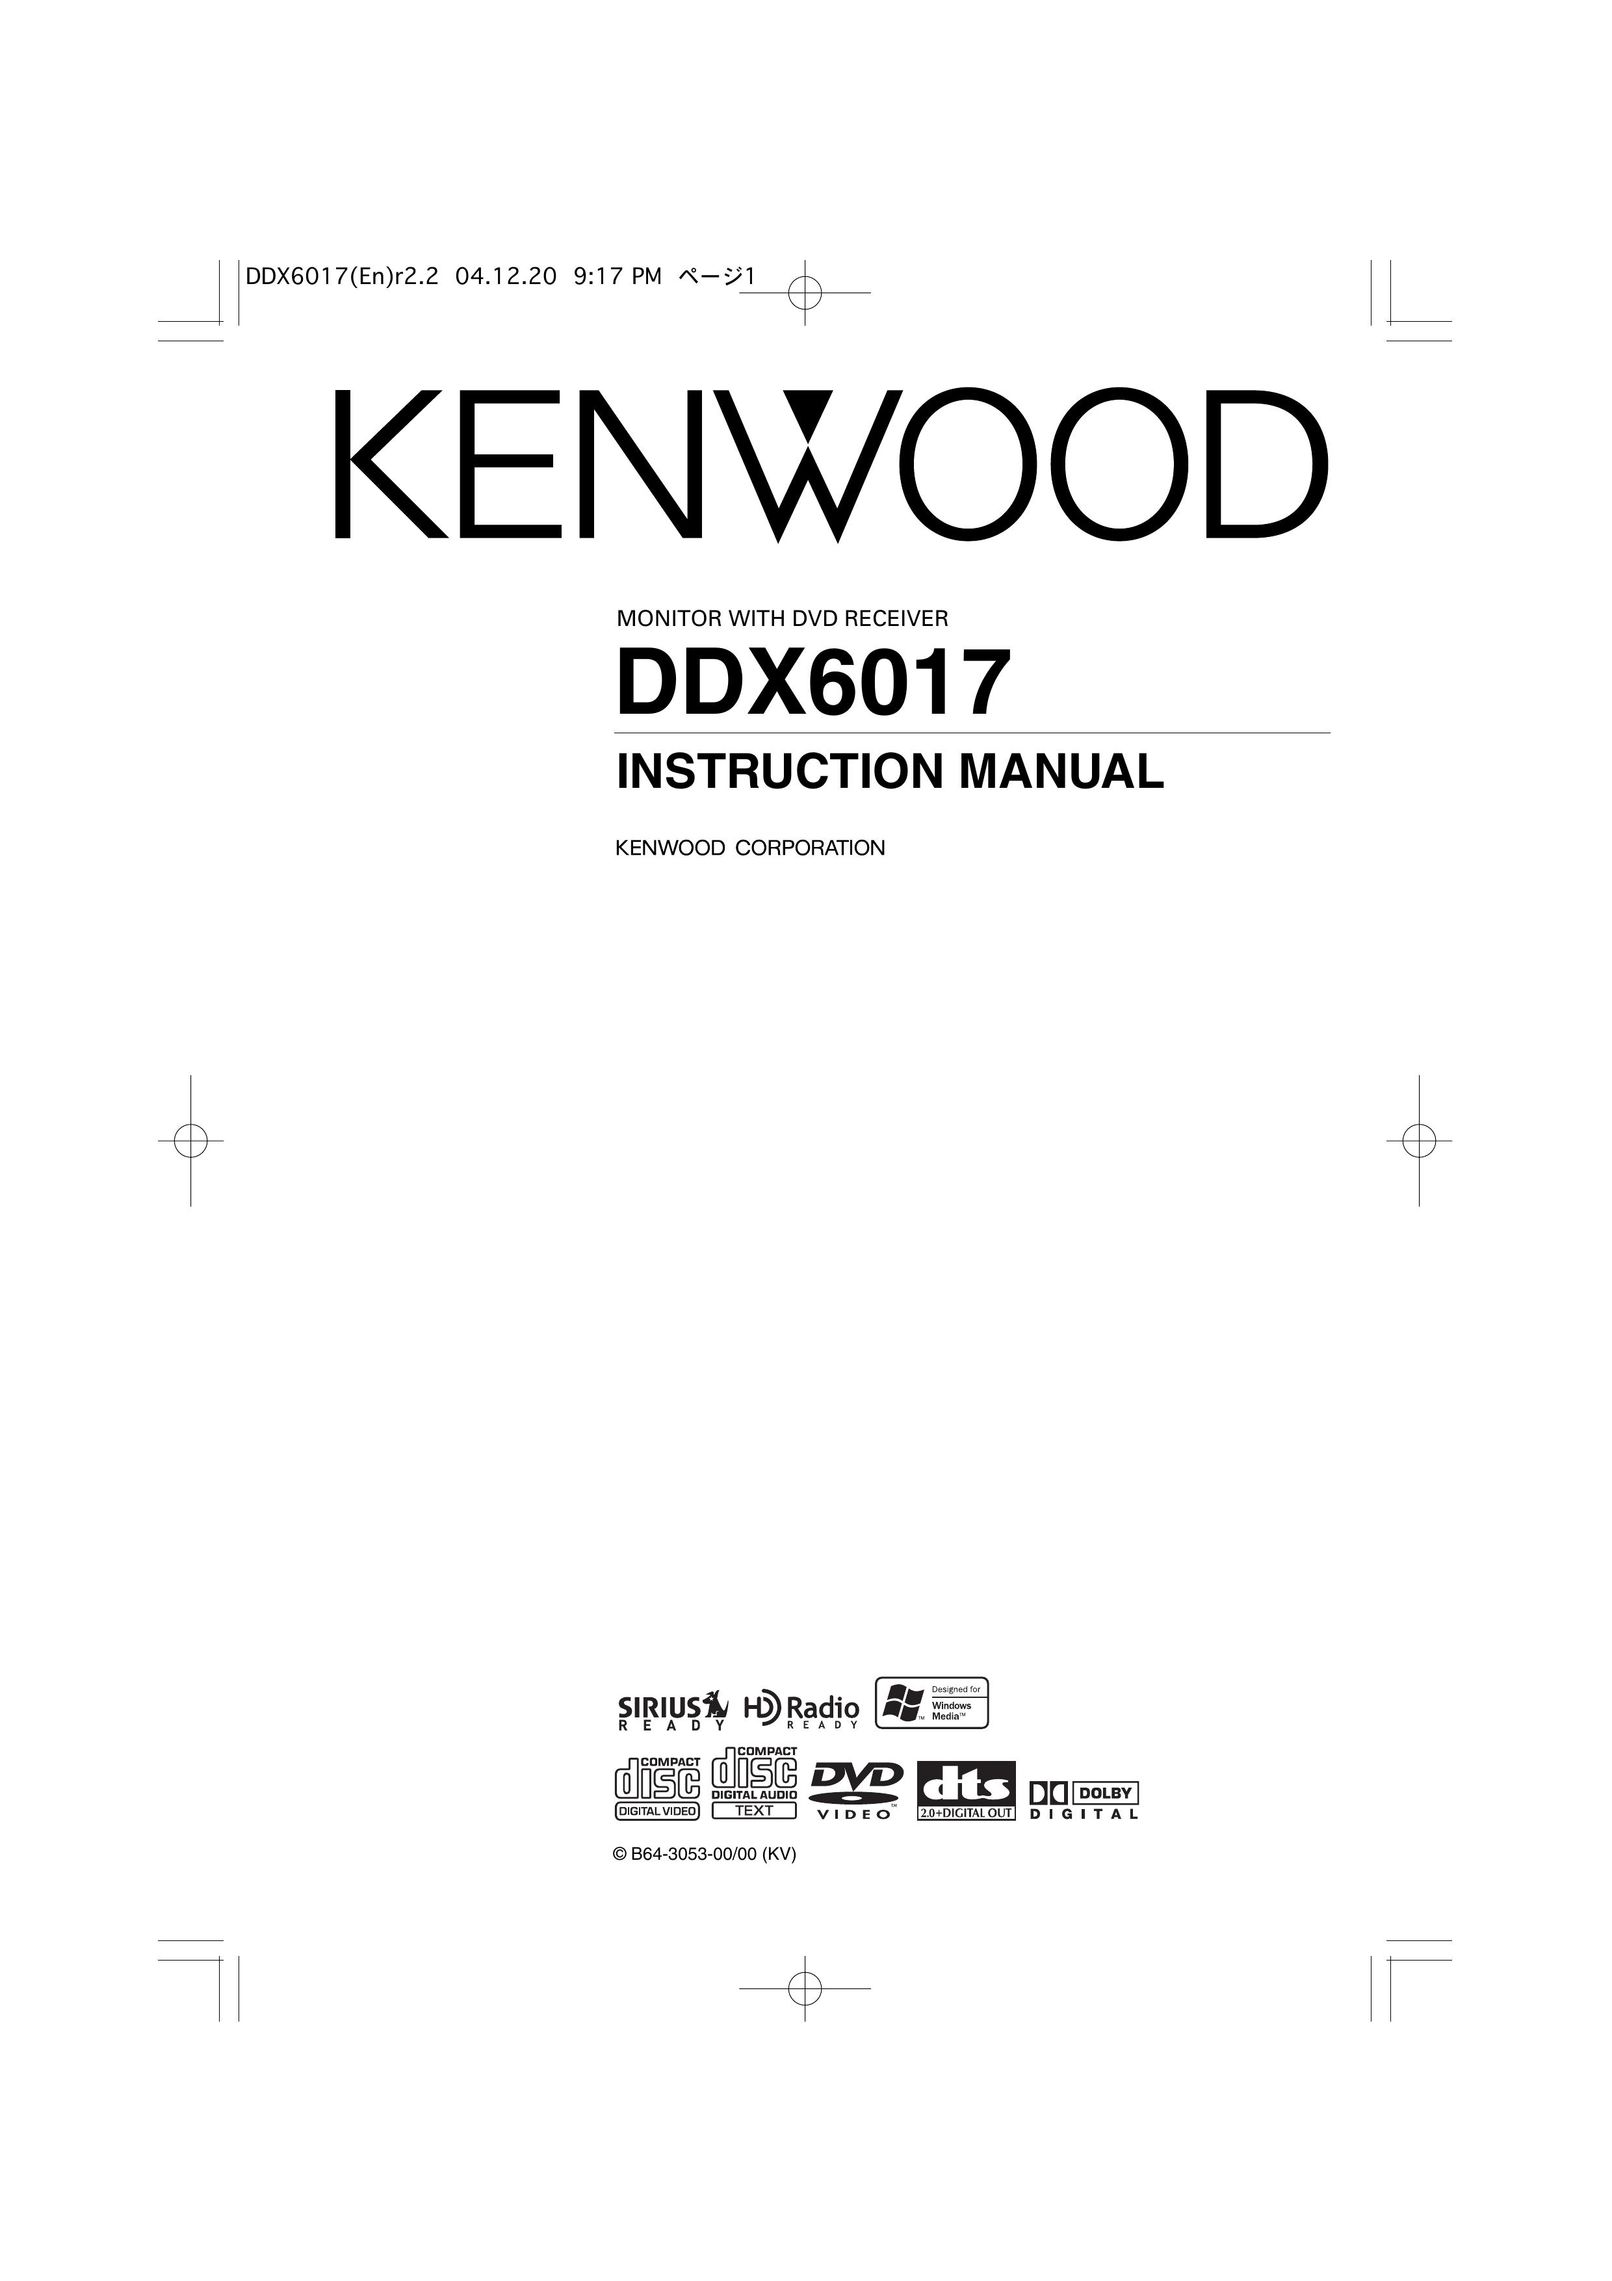 Kenwood DDX6017 Portable DVD Player User Manual